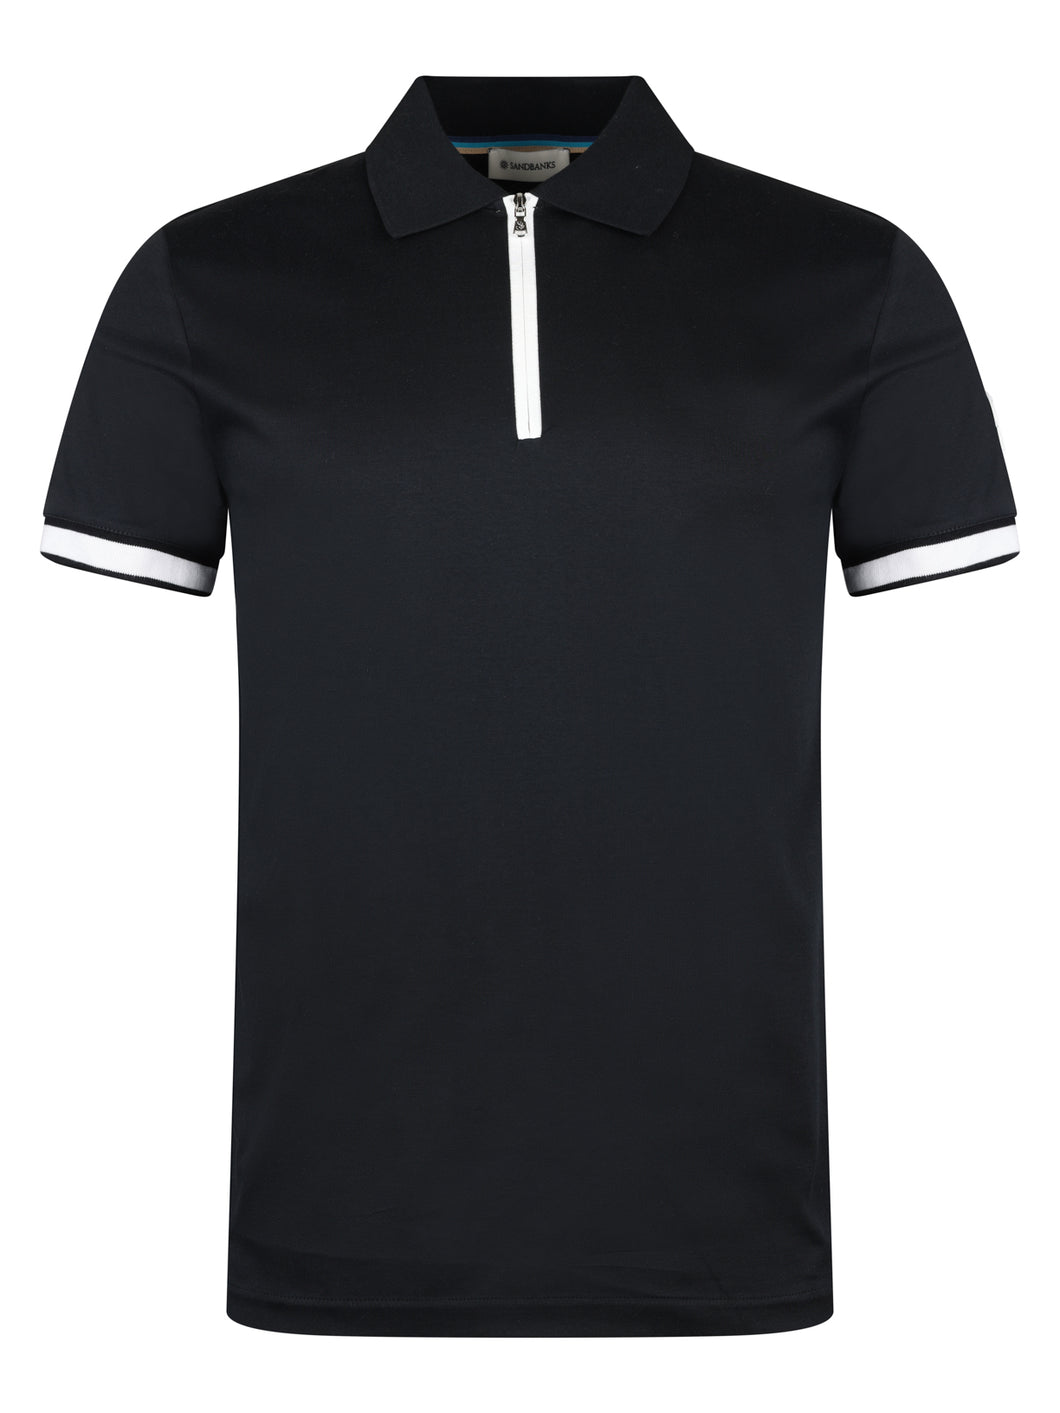 Sandbanks Silicone Zip Polo Shirt Black